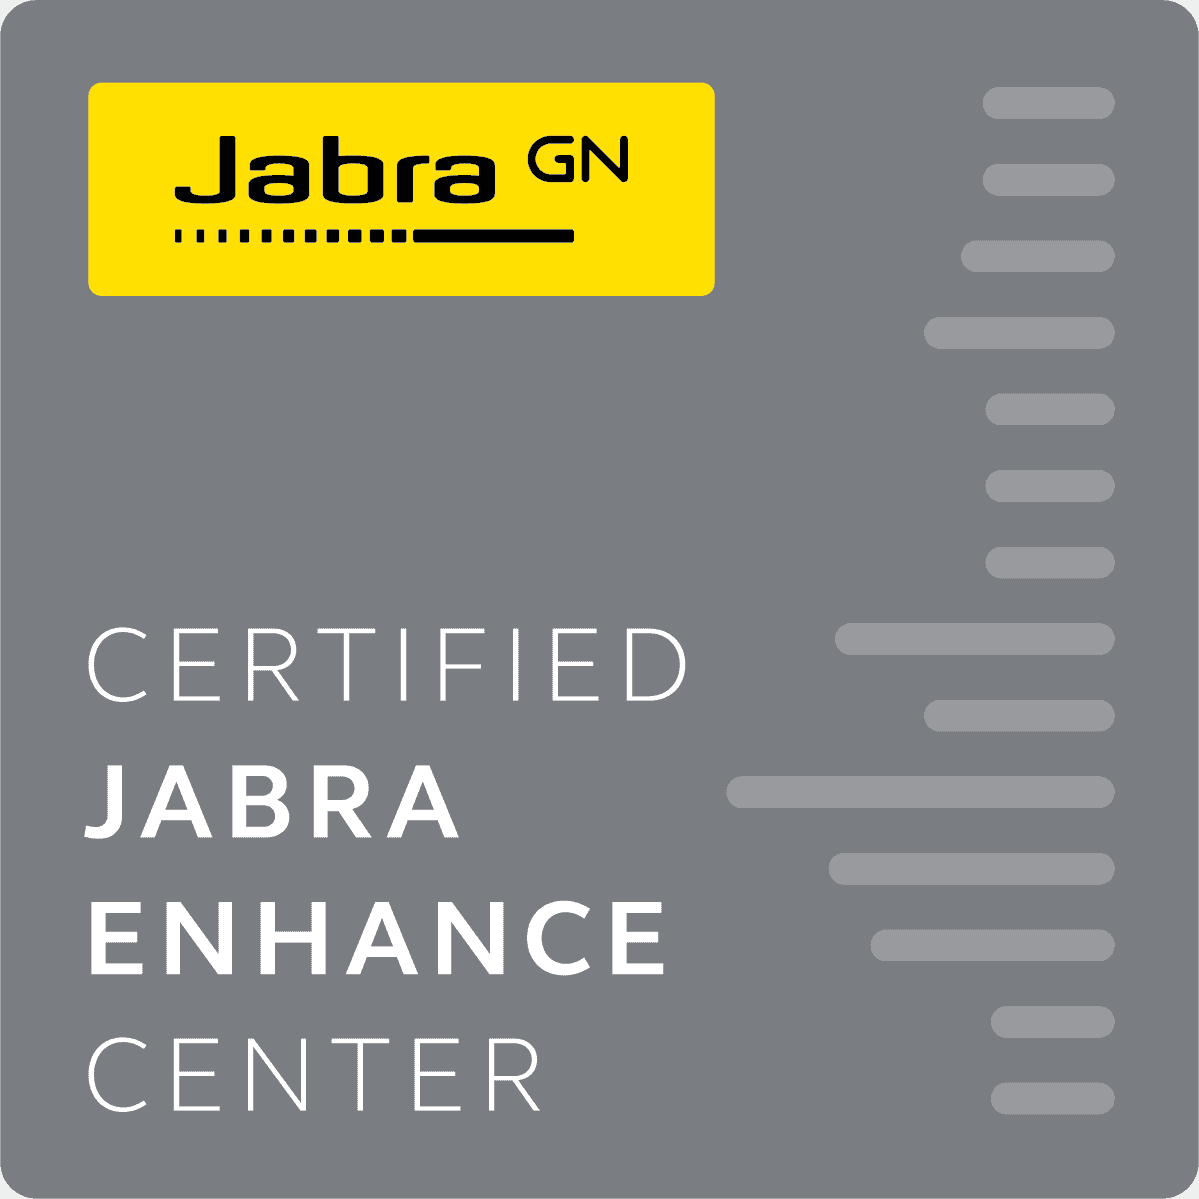 Jabra GN Certified Center